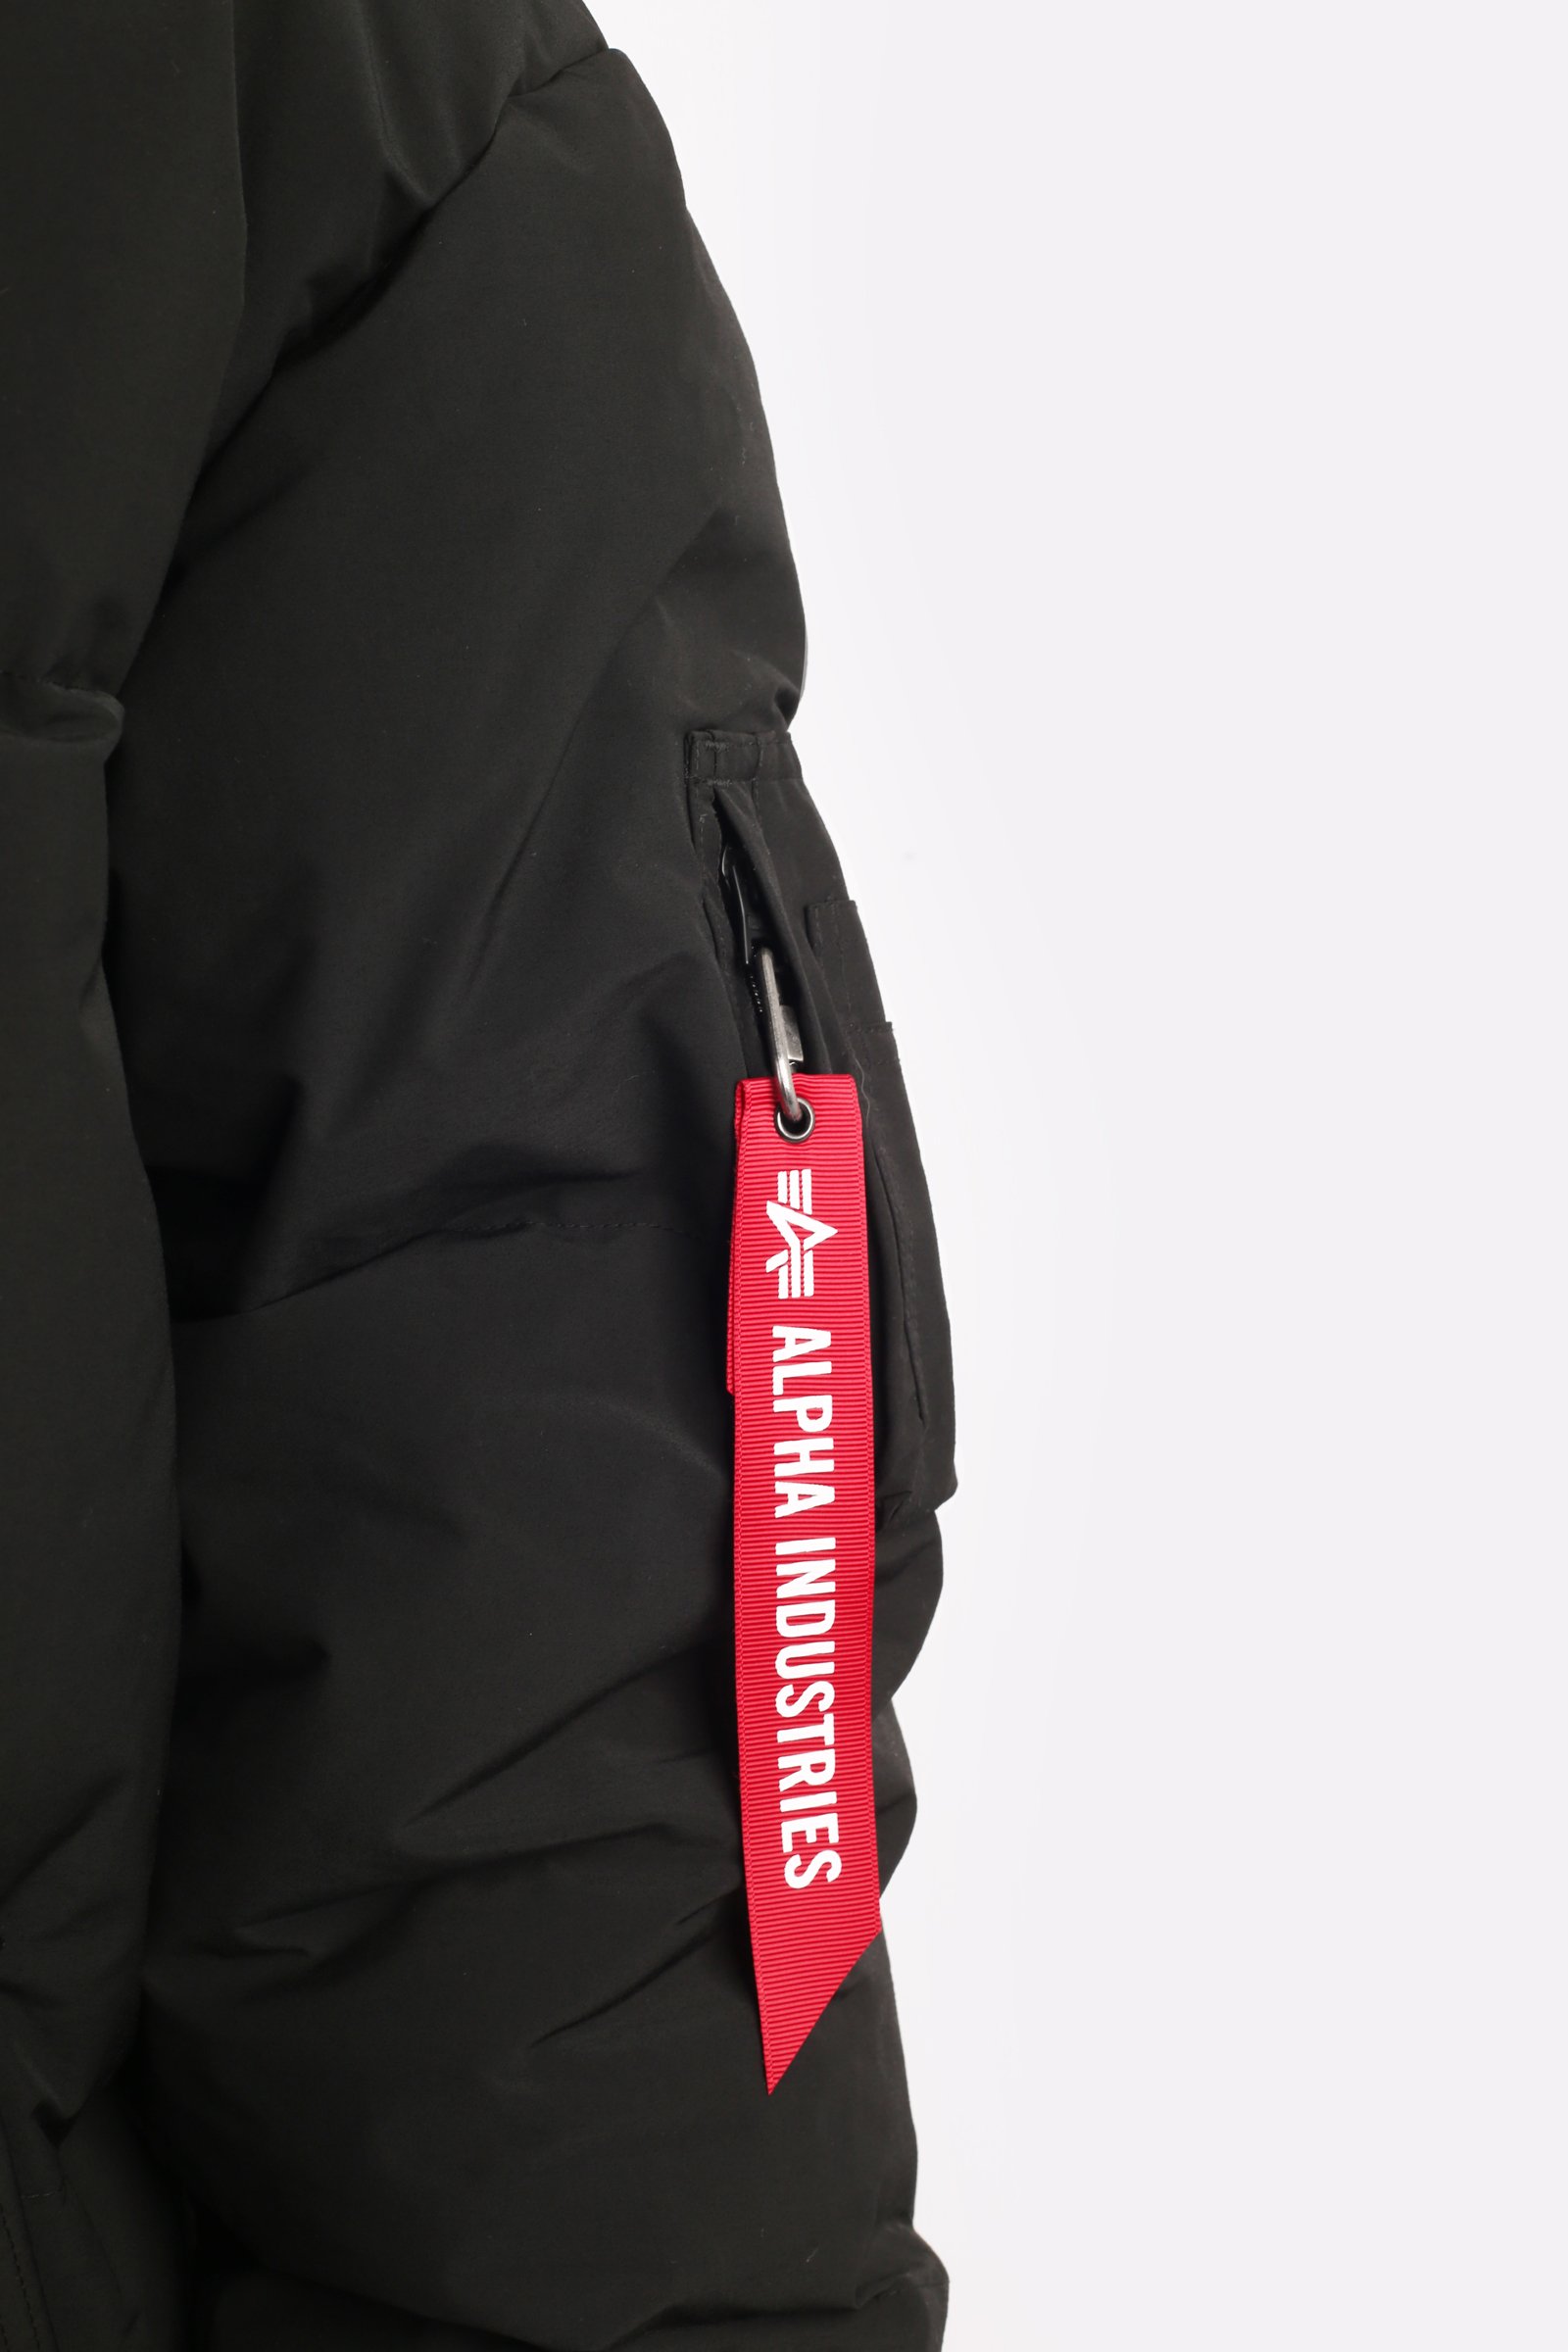 мужская куртка Alpha Industries Puffer Parka  (MJH53500C1-black)  - цена, описание, фото 6